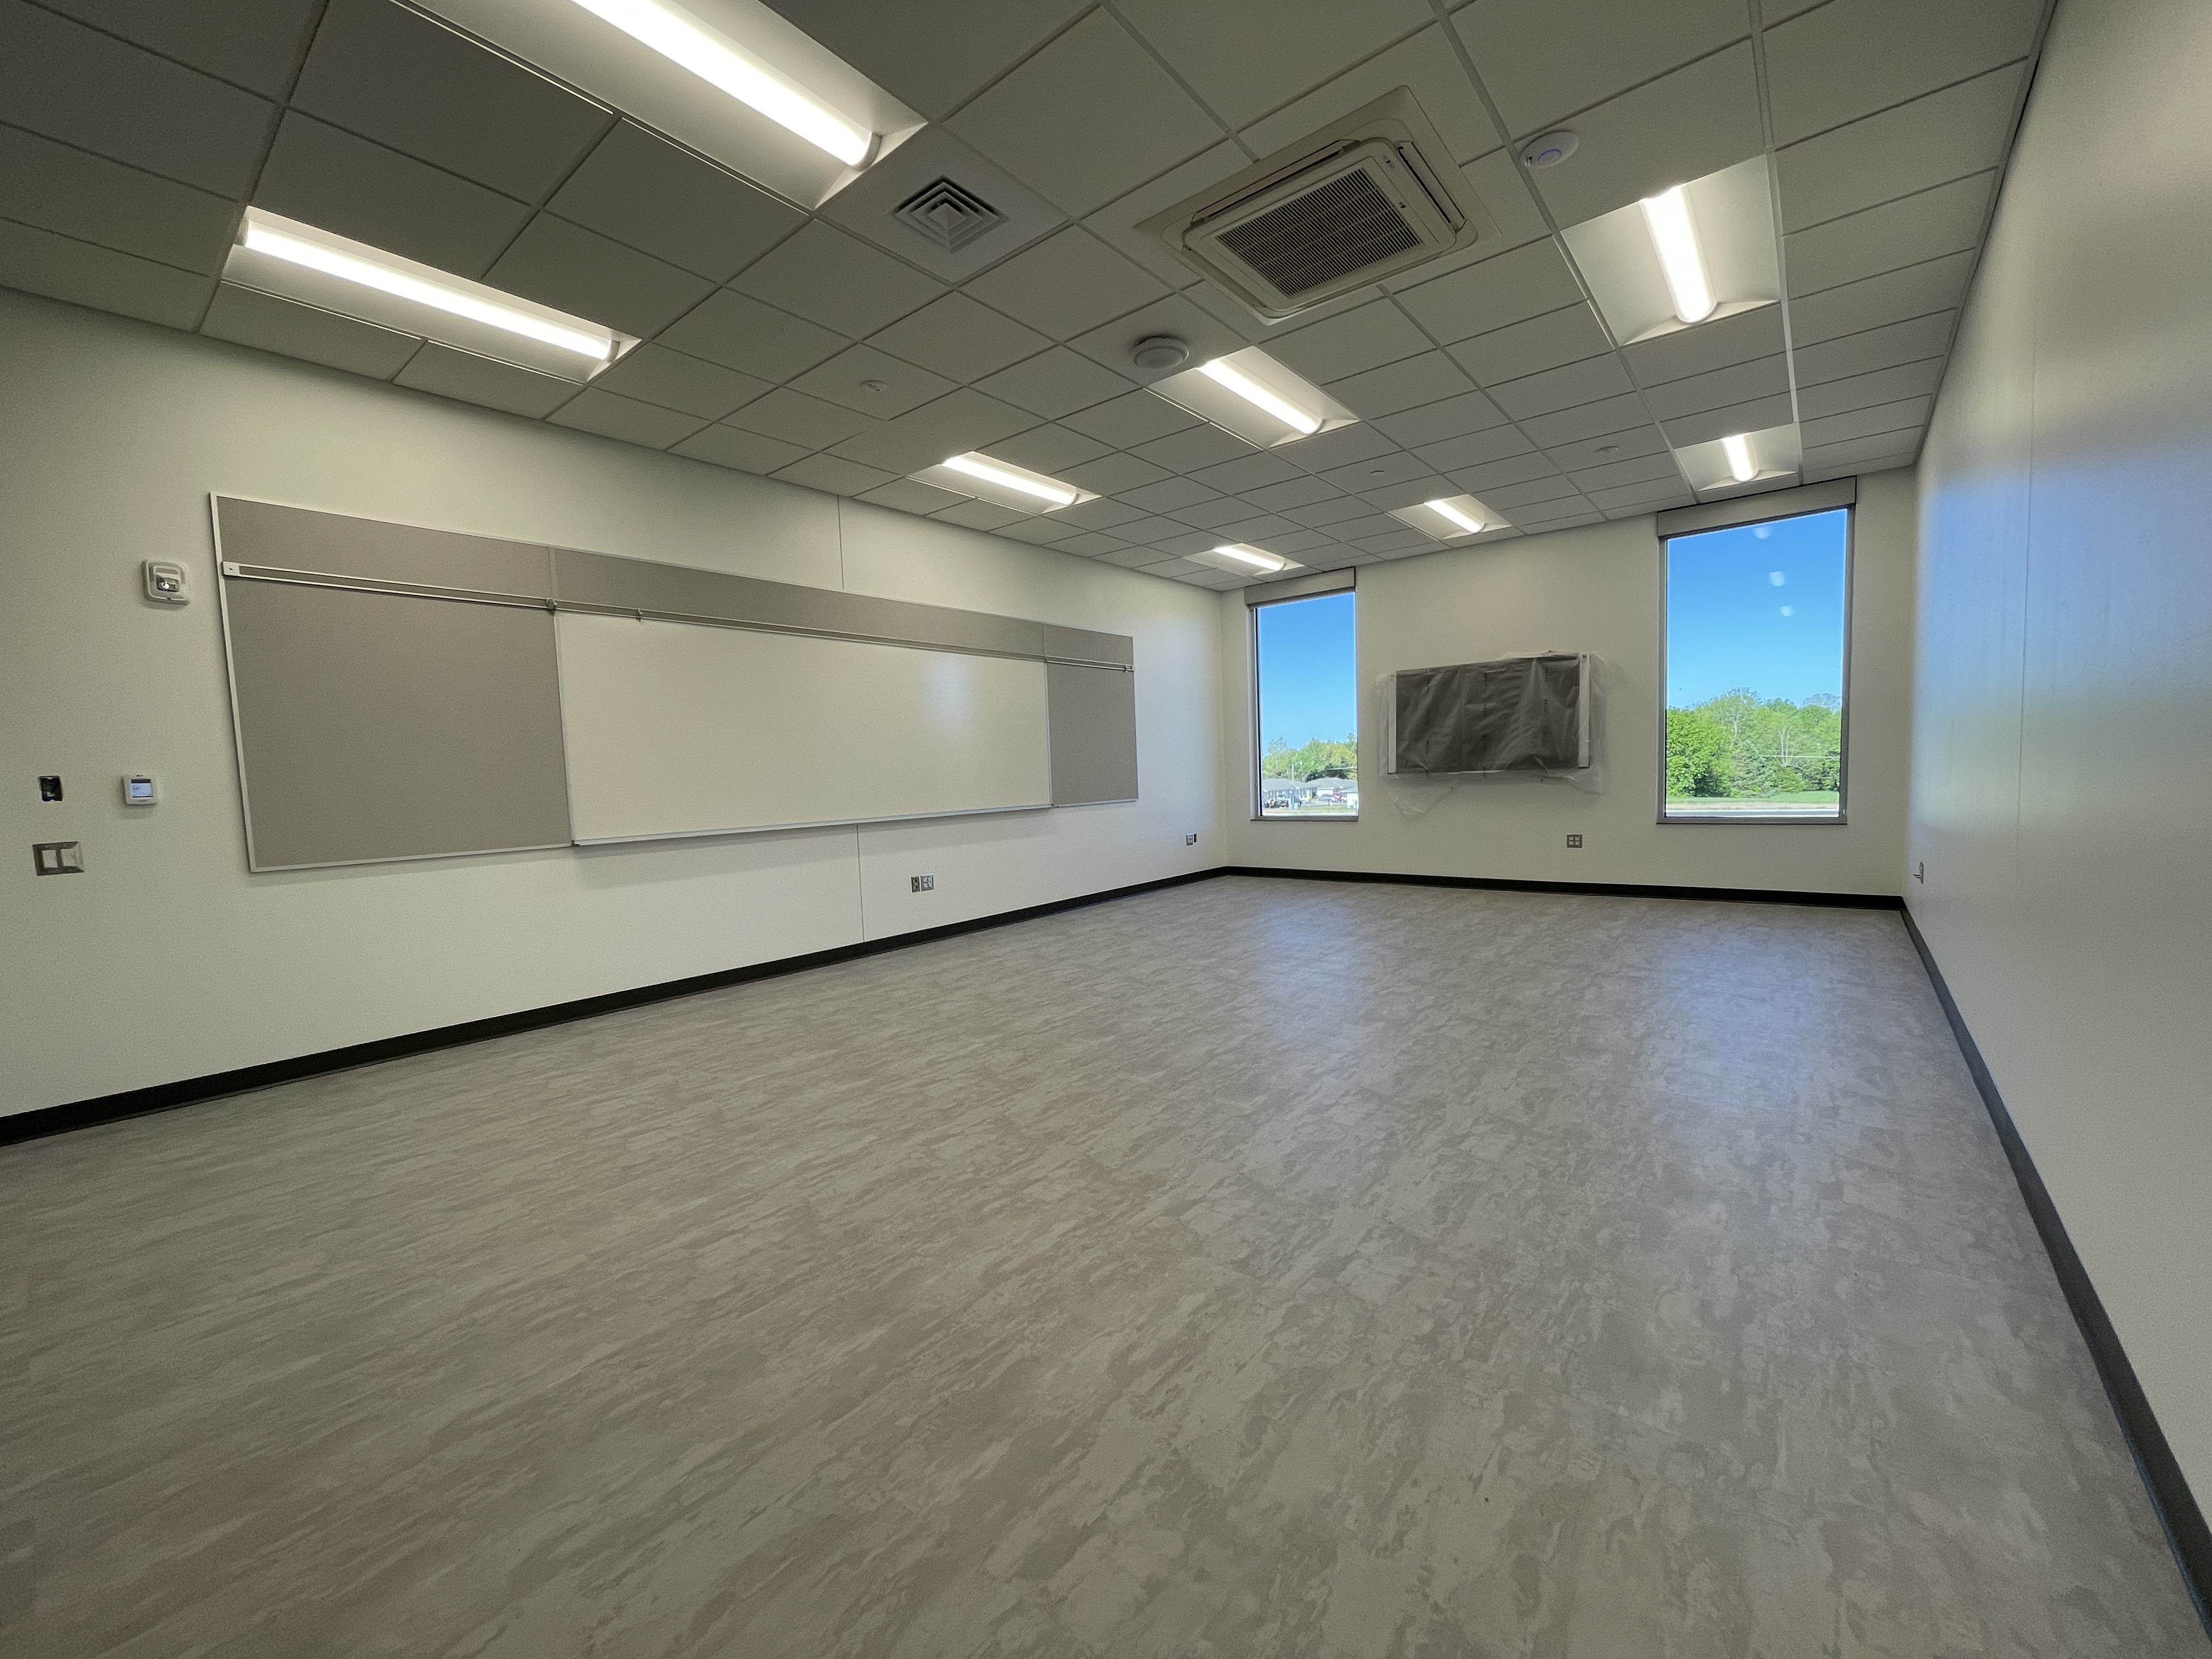 New MMS classroom